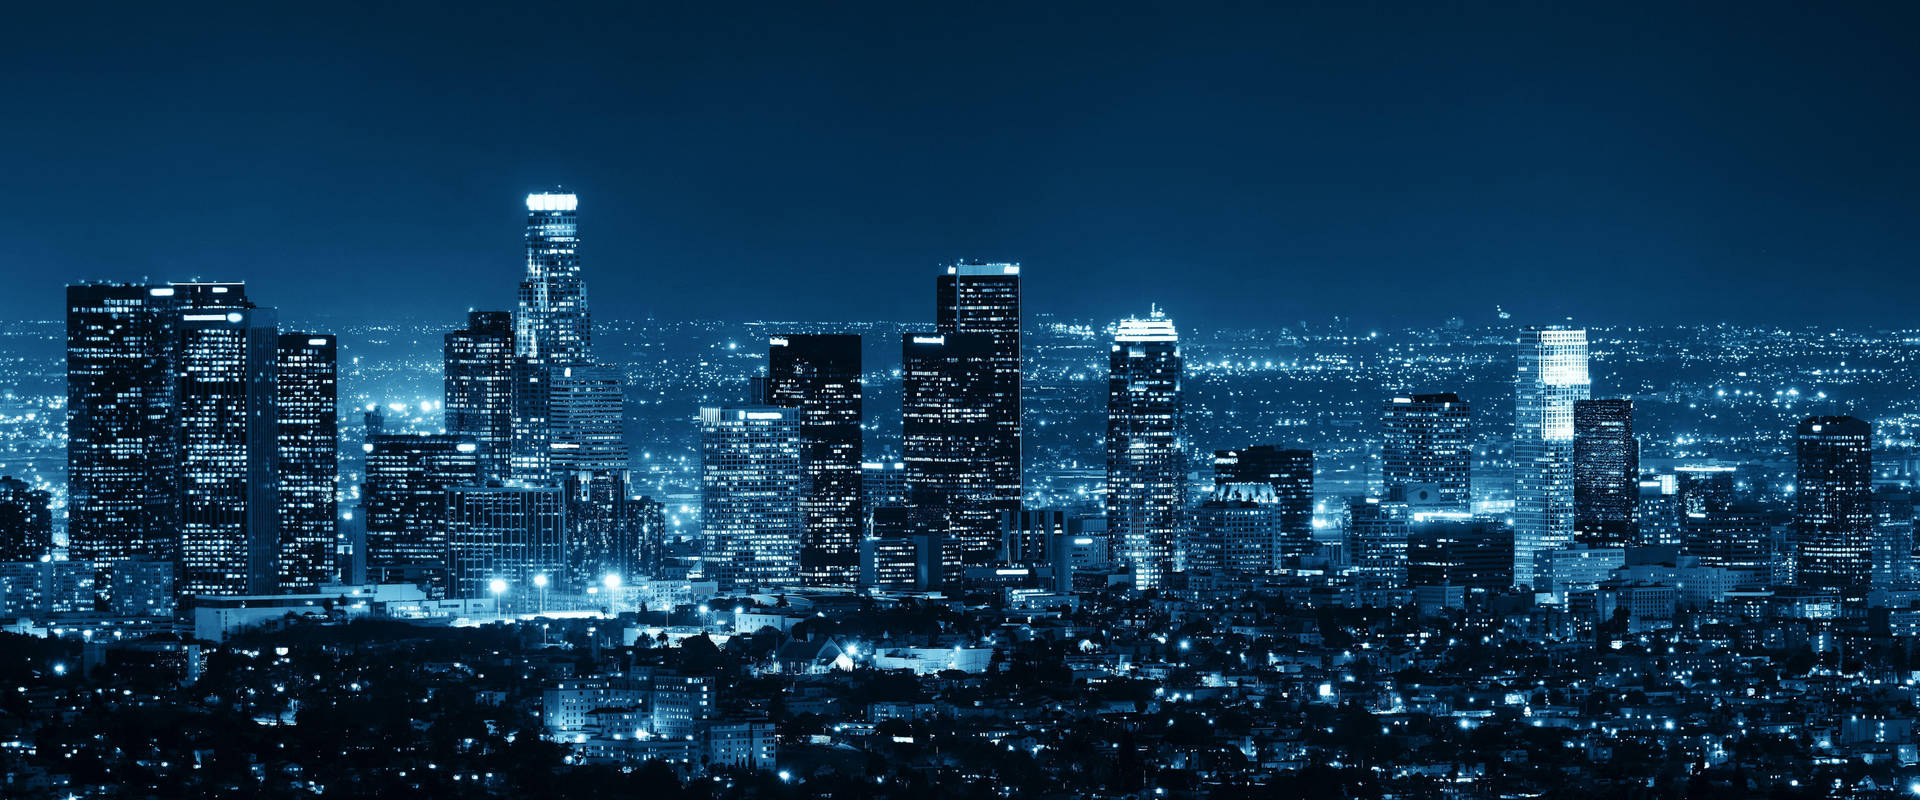 Blue-tinted Skyline Photo Of Los Angeles 4k Wallpaper